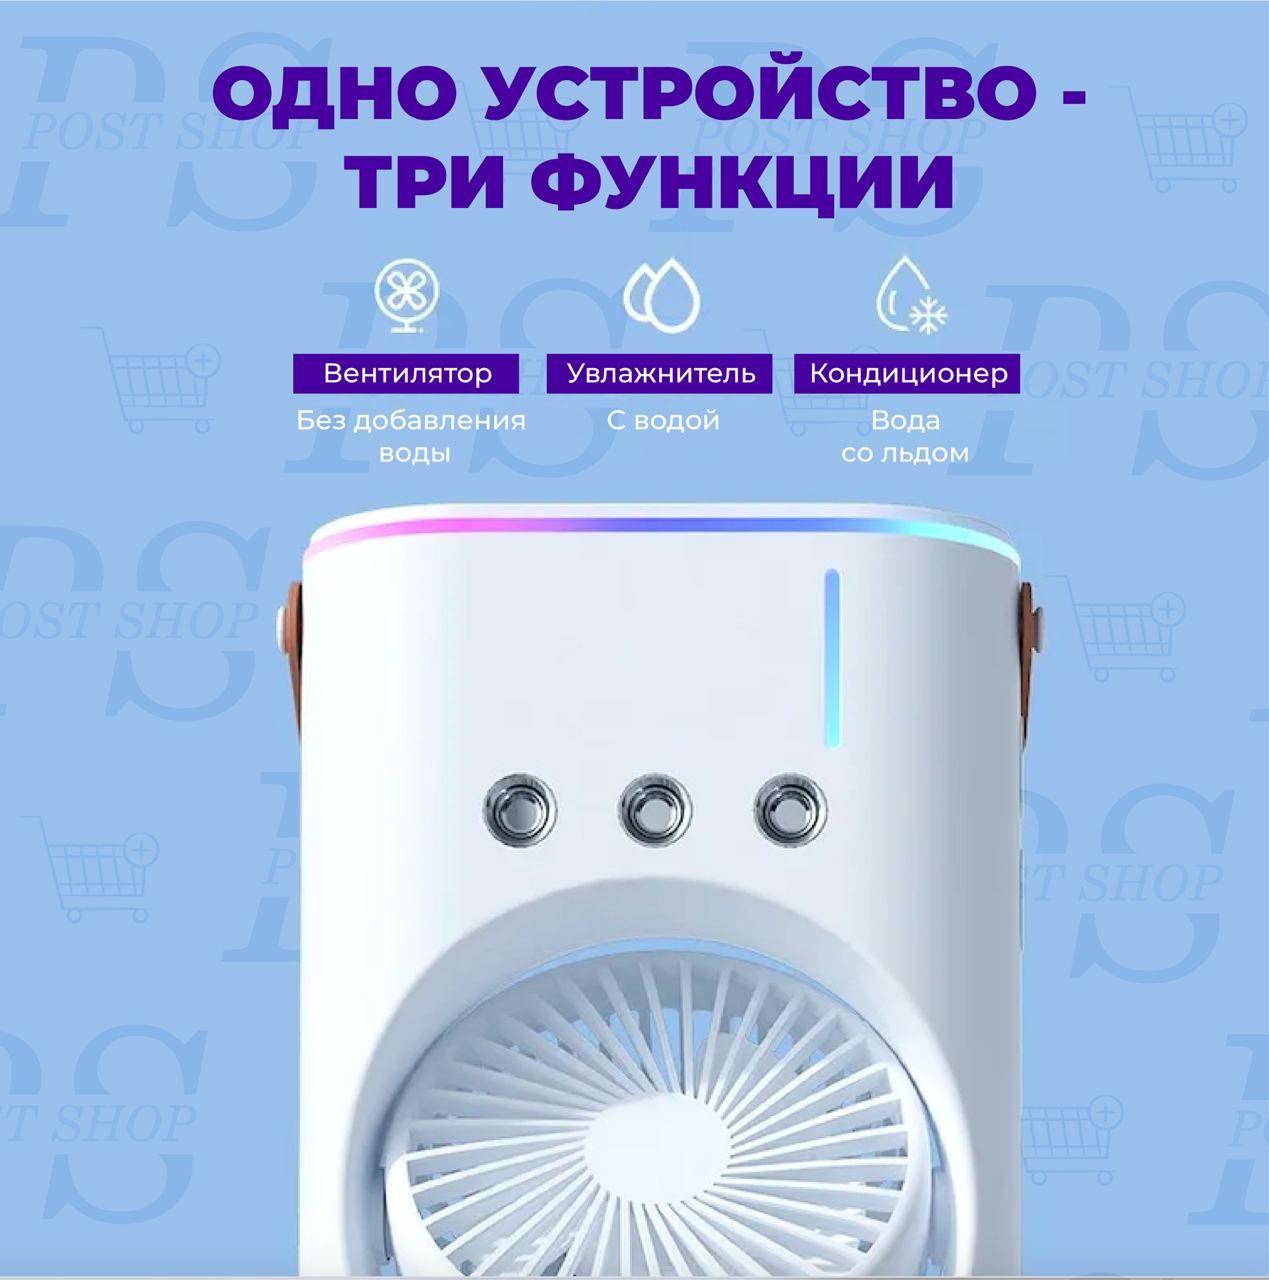 https://cdn1.ozone.ru/s3/multimedia-1-y/7037378530.jpg